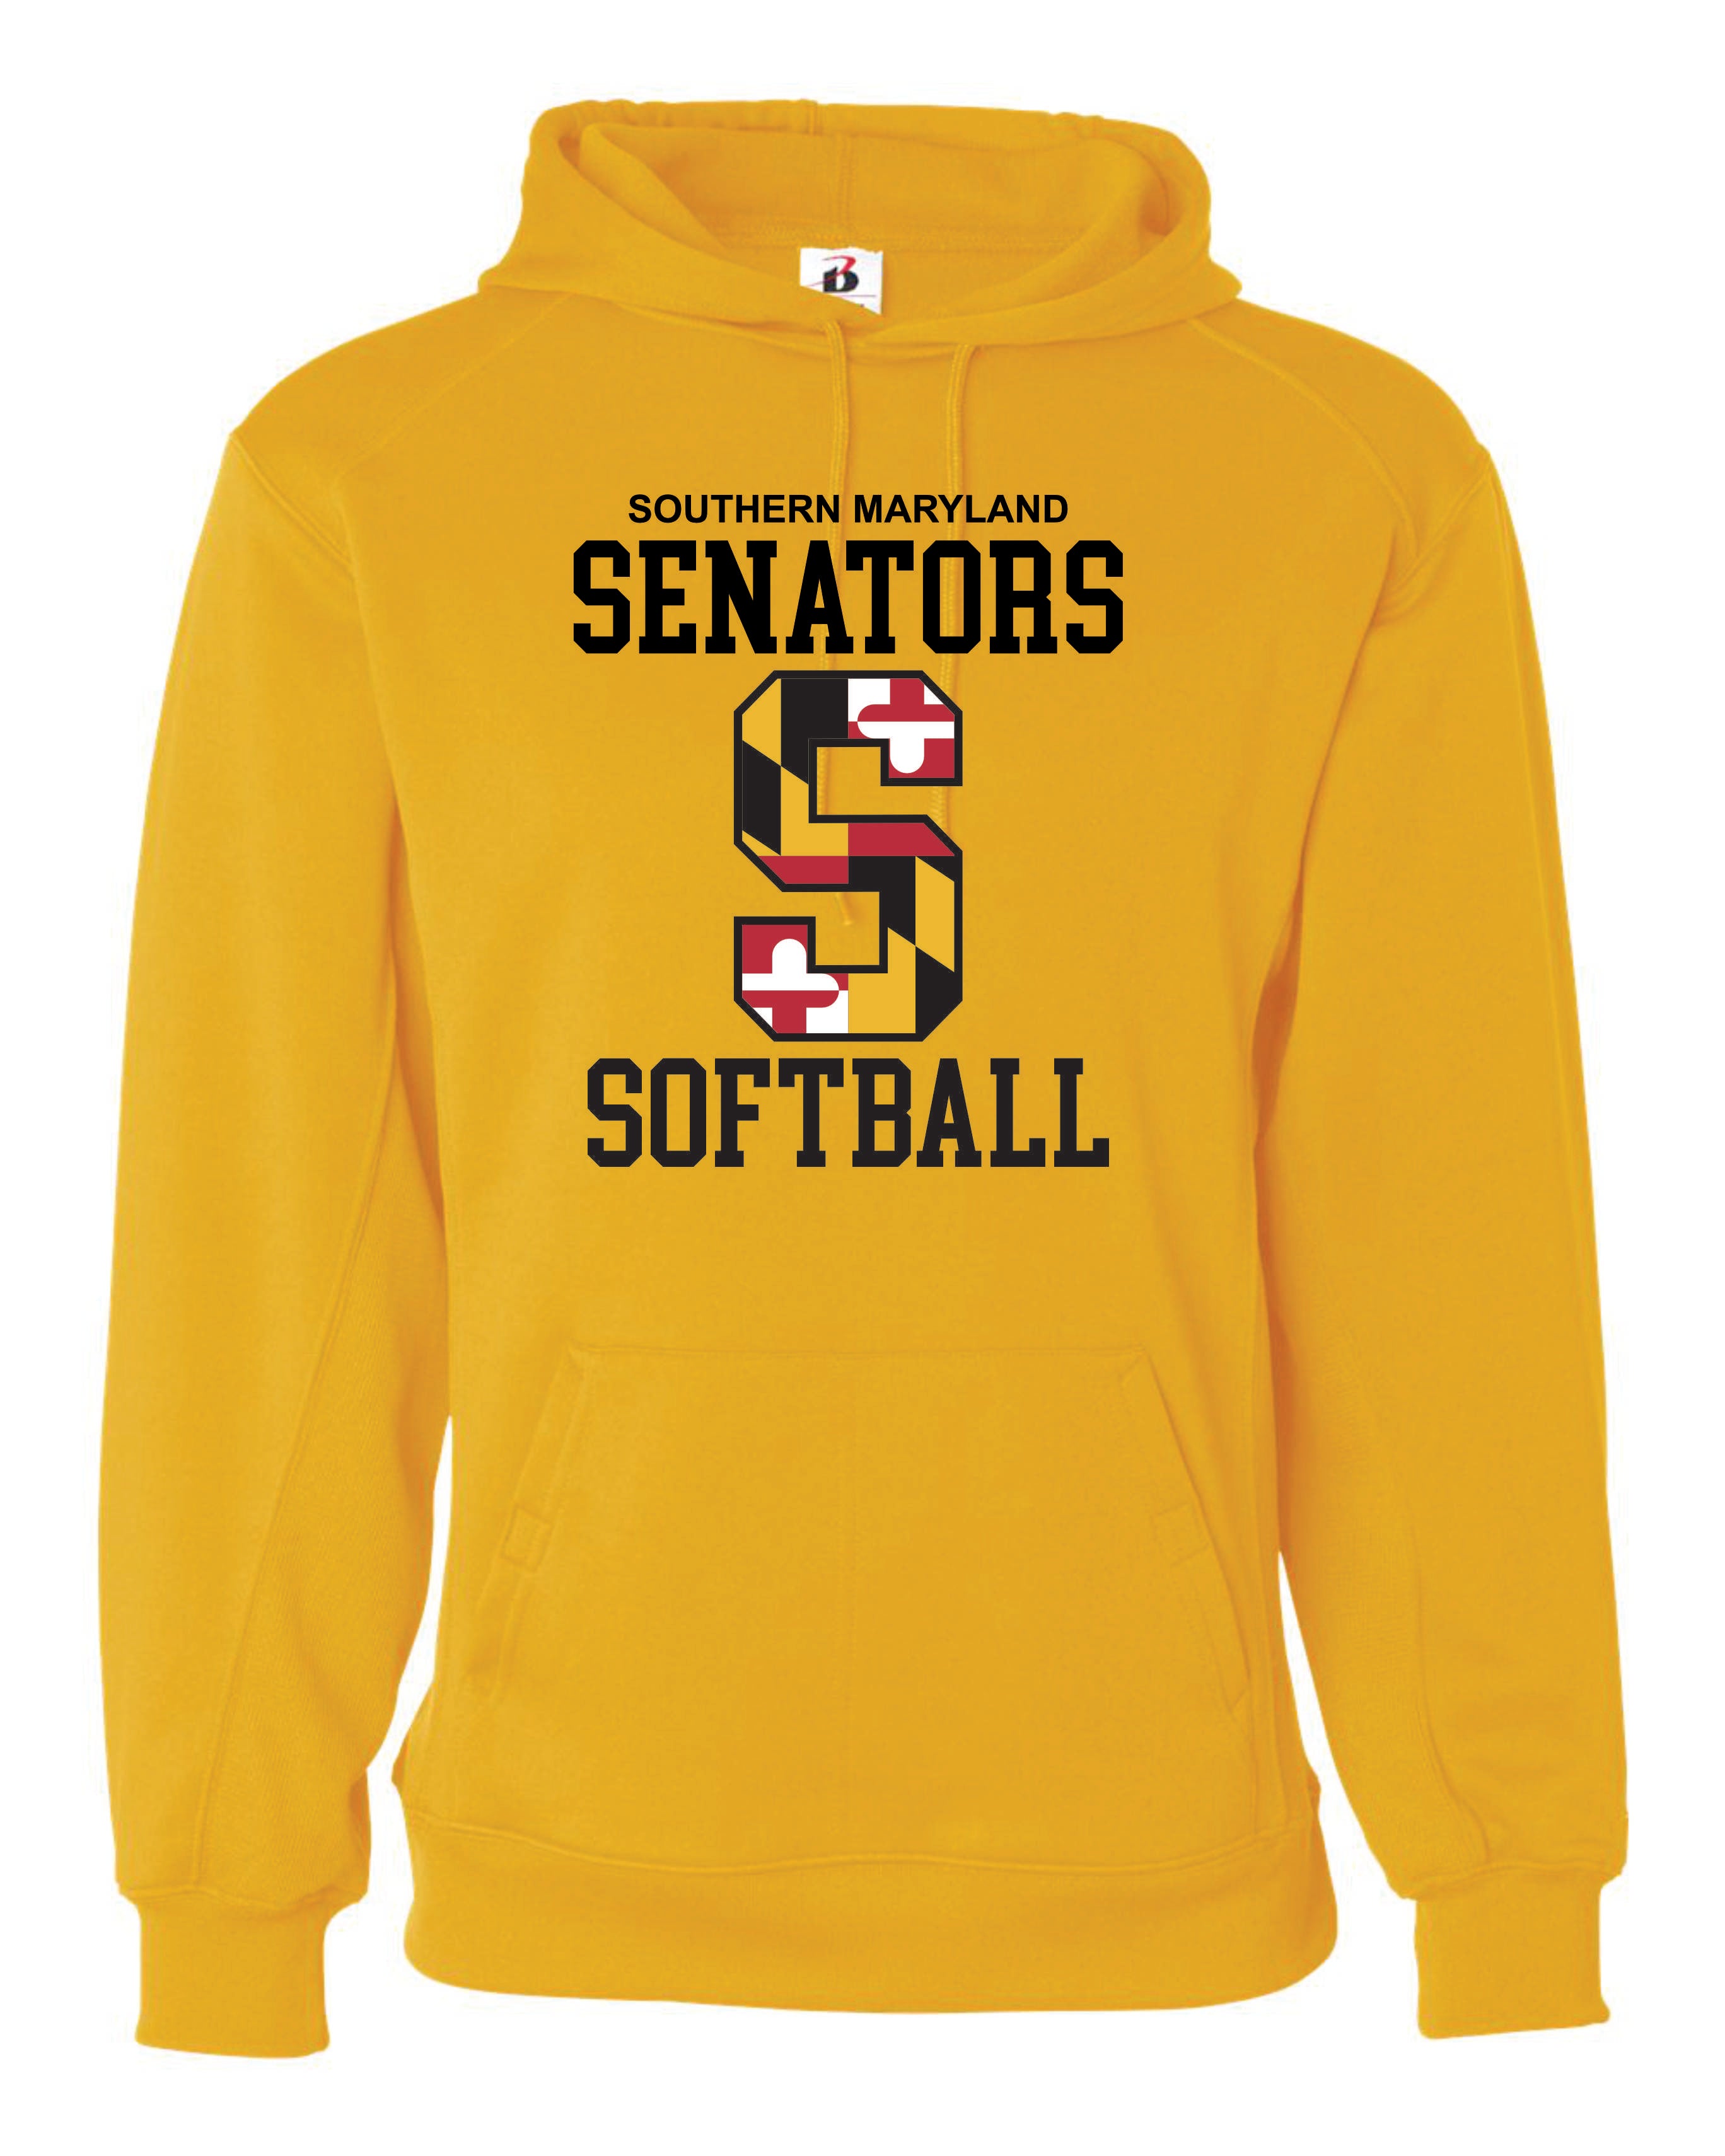 Senators Softball Badger Dri-Fit Hoodie Big S Logo Women